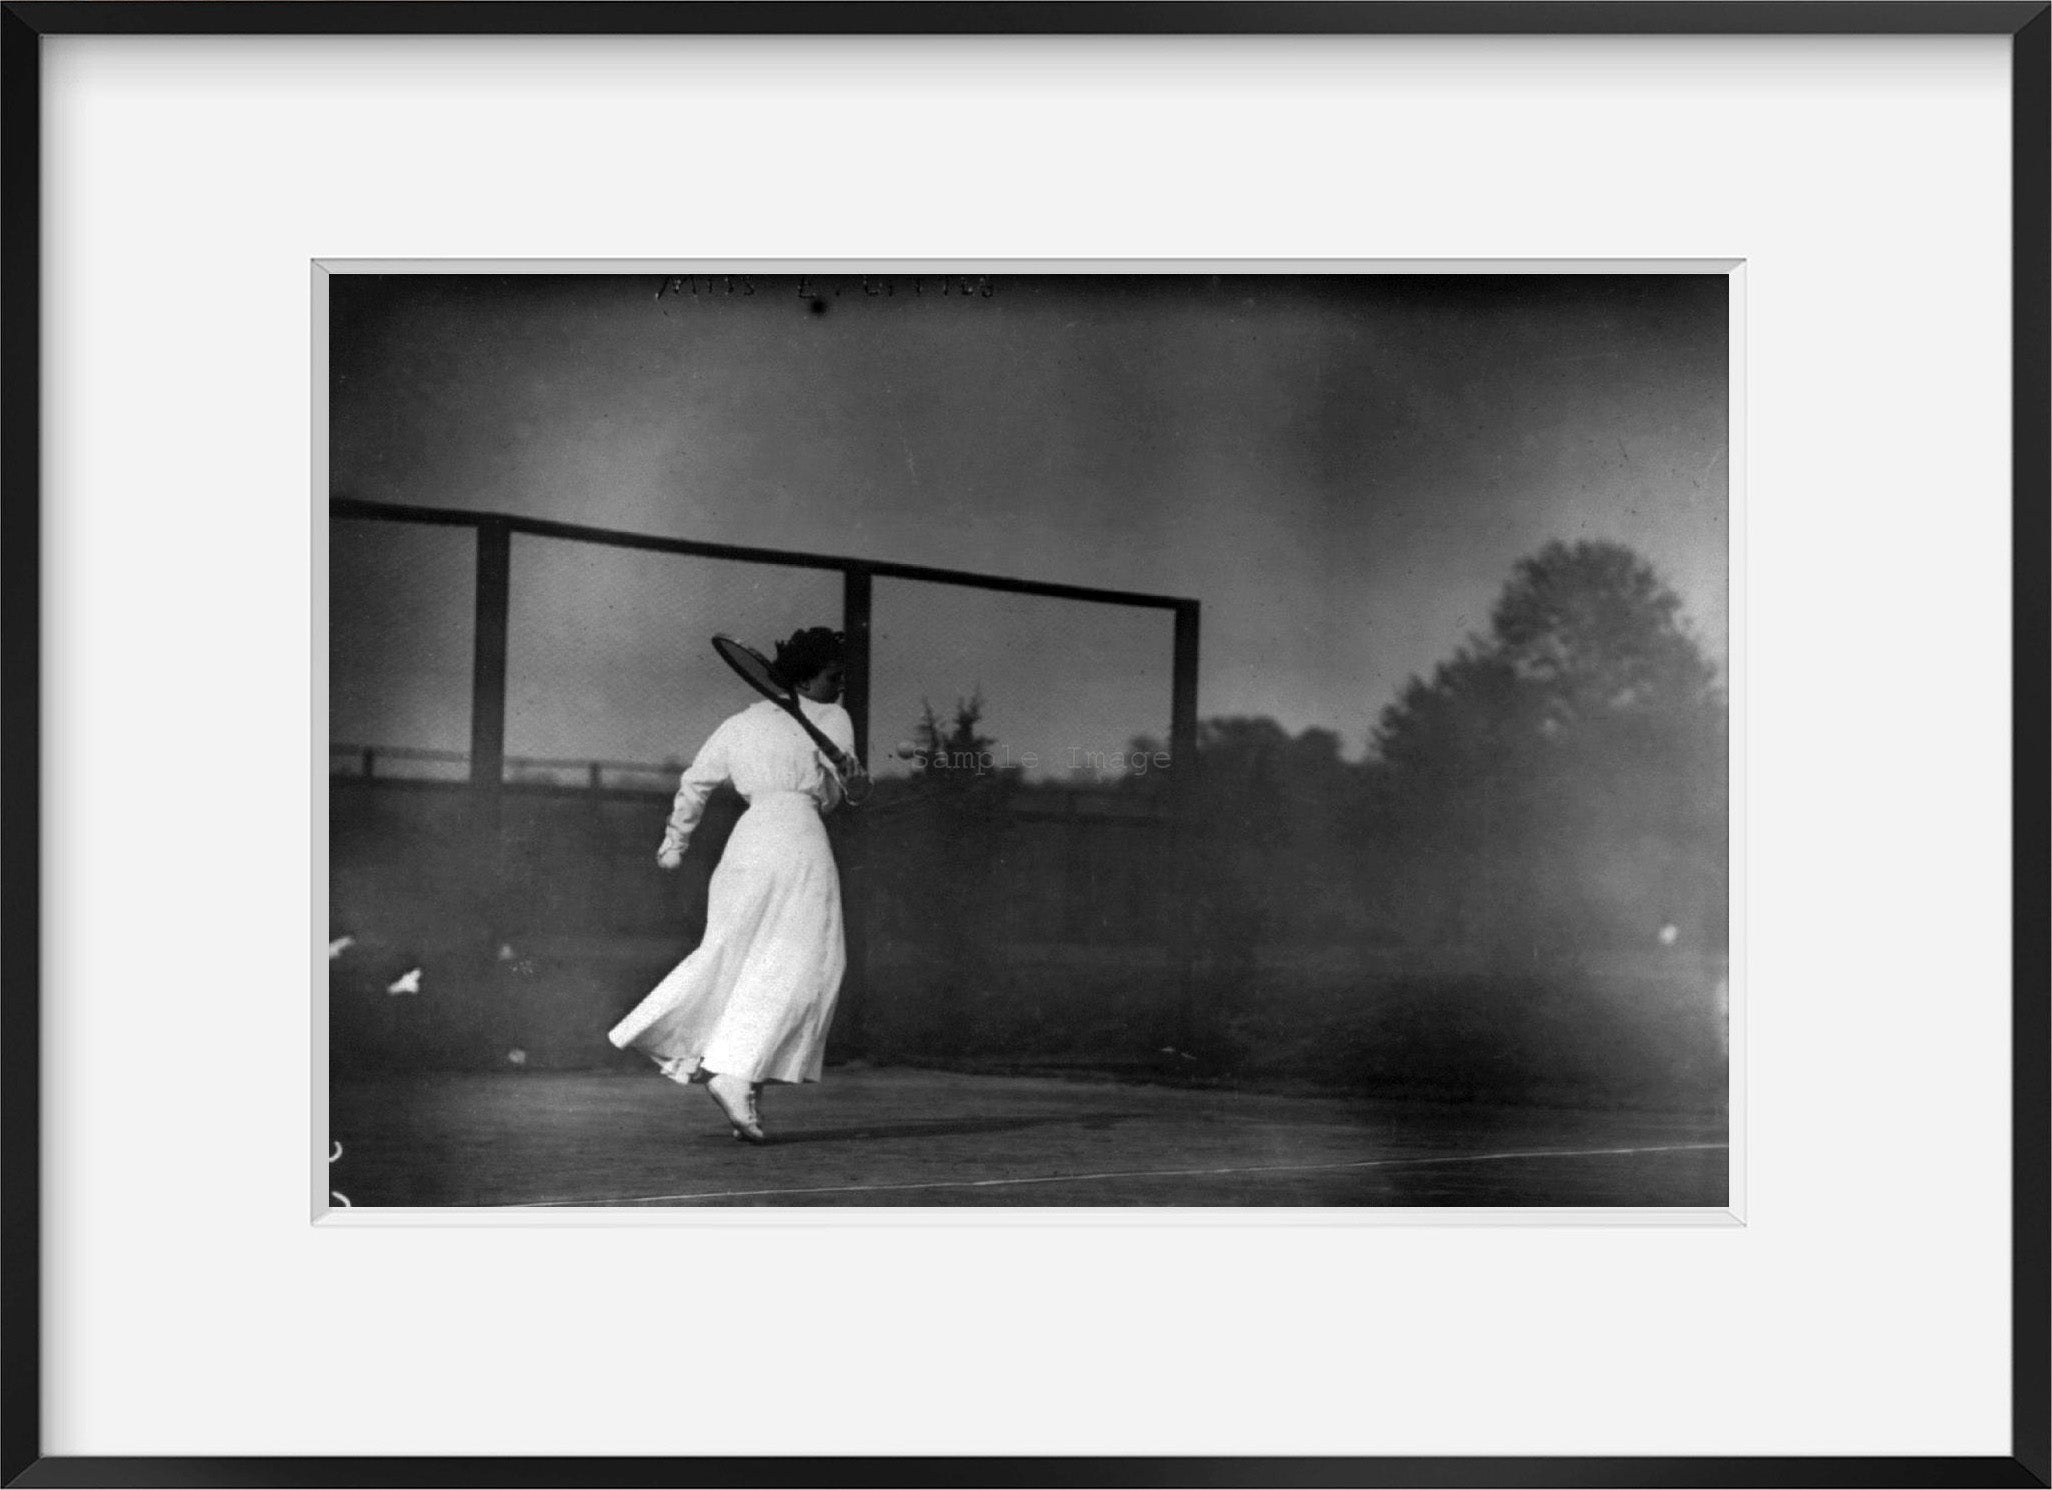 Photo: Miss E. Little, swinging at tennis ball, February 1912, wearing white dress